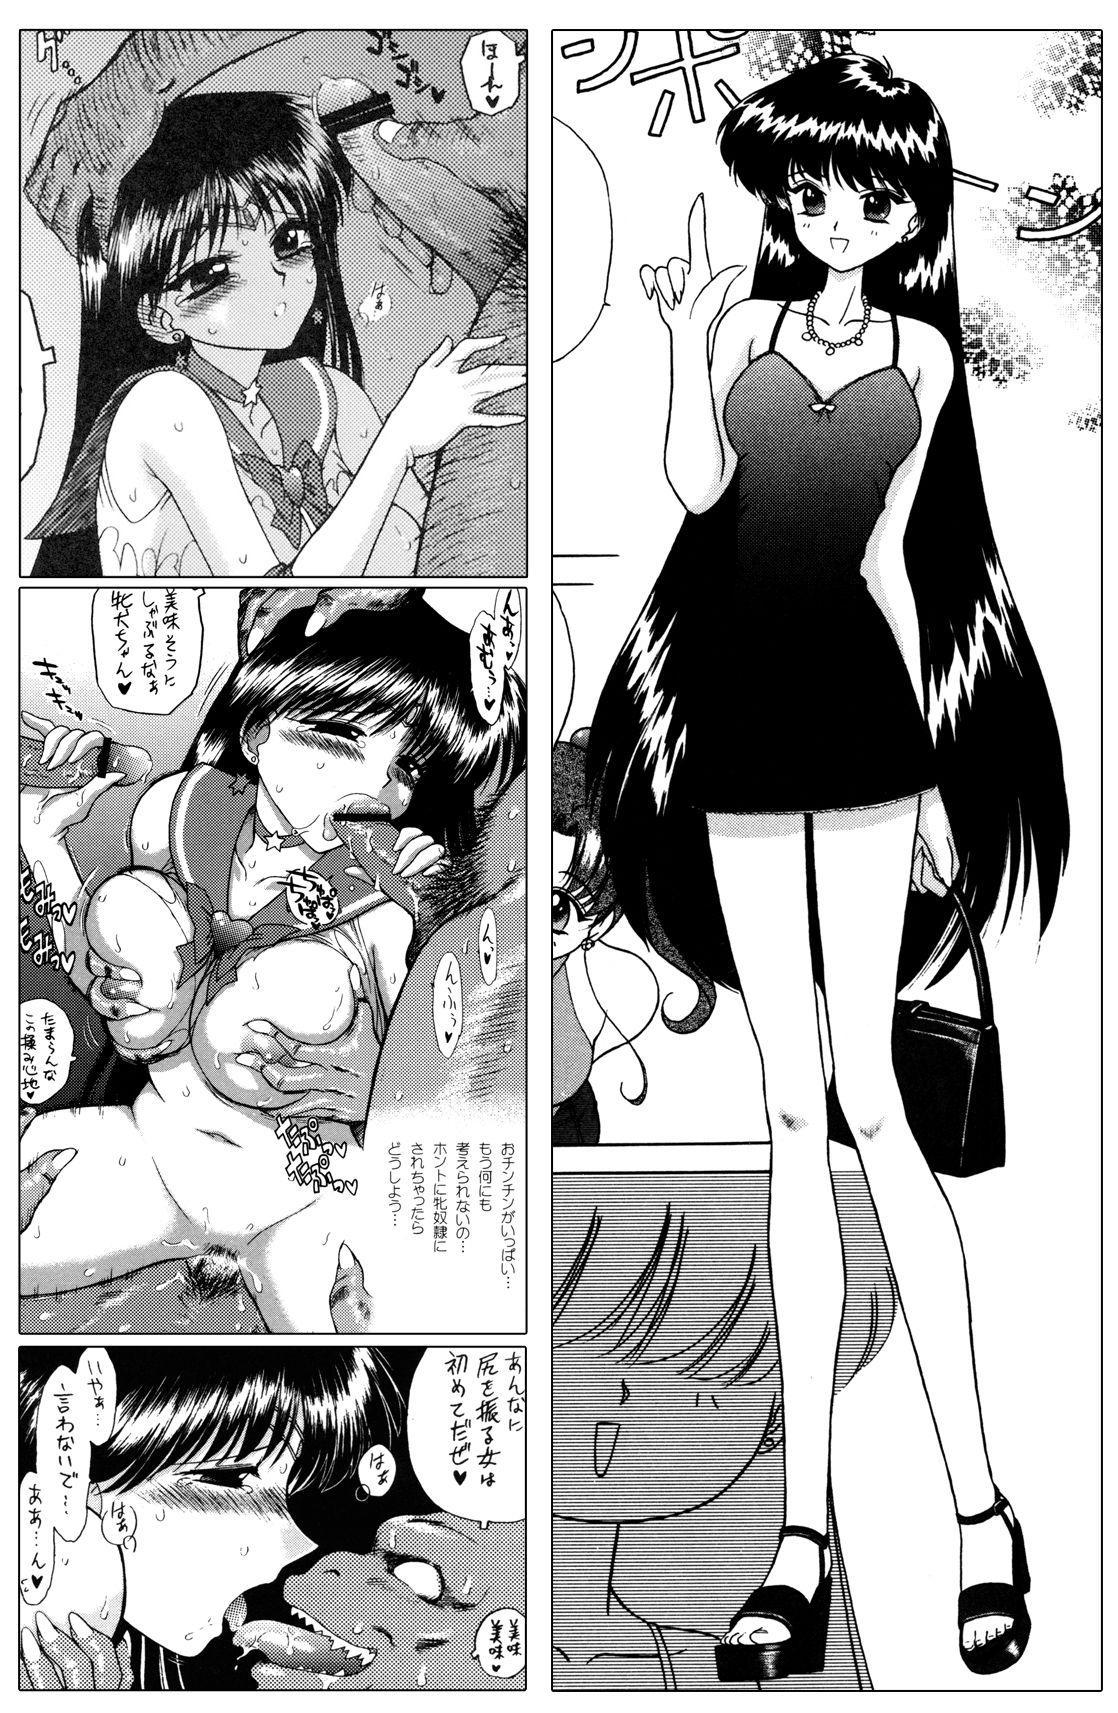 Cachonda QUEEN OF SPADES - 黑桃皇后 - Sailor moon Loira - Page 12